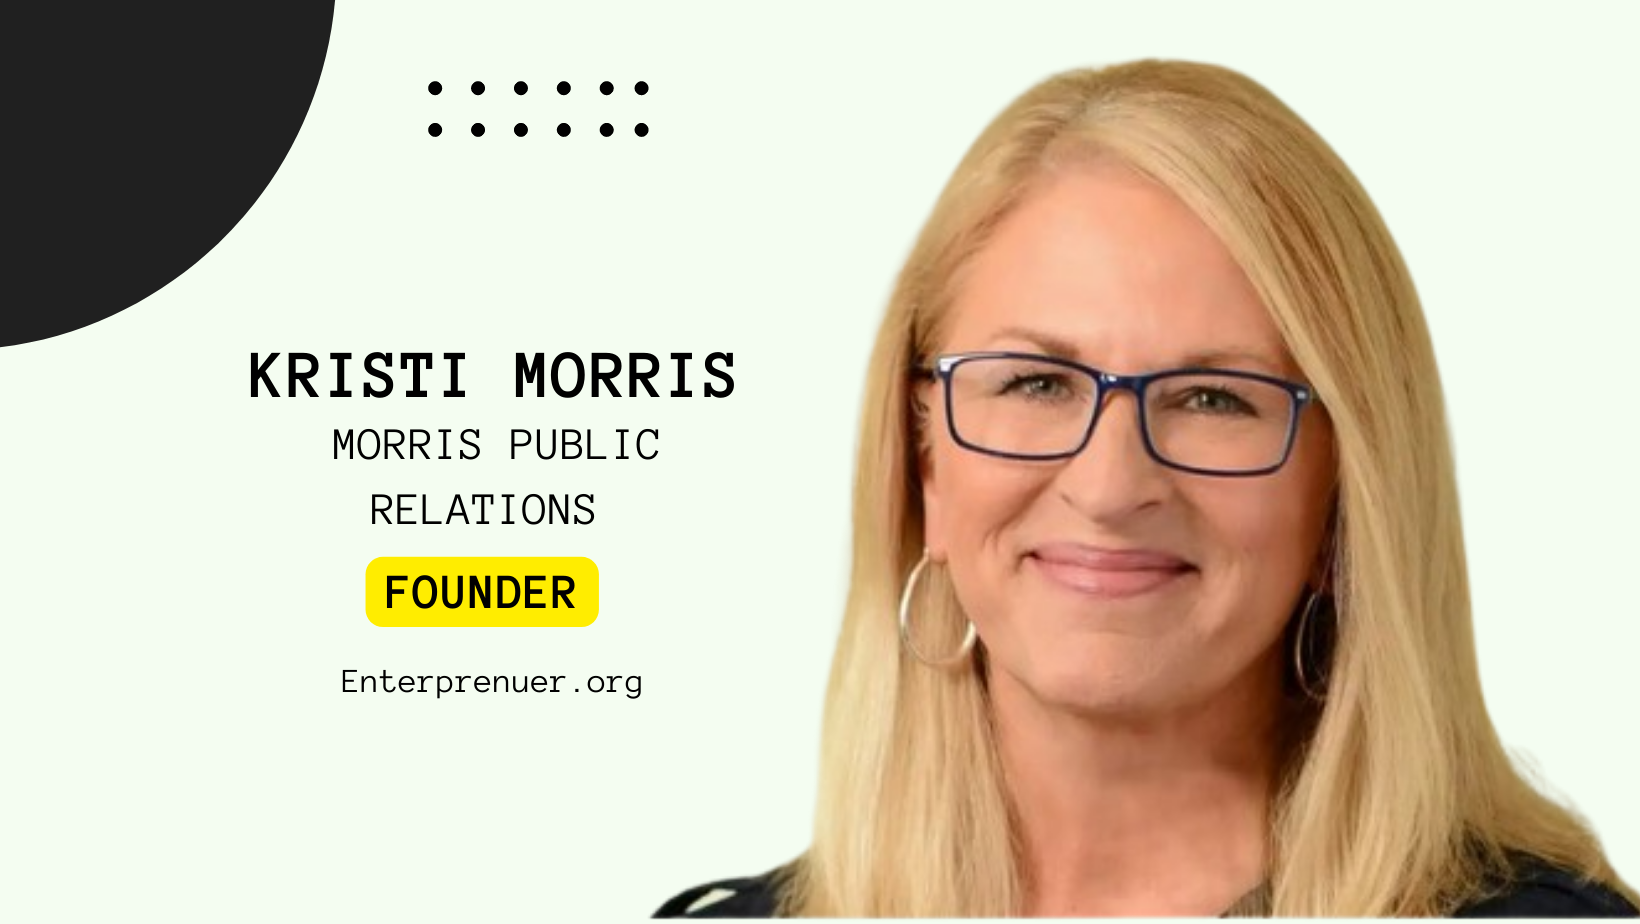 Meet Kristi Morris, Founder of Morris Public Relations